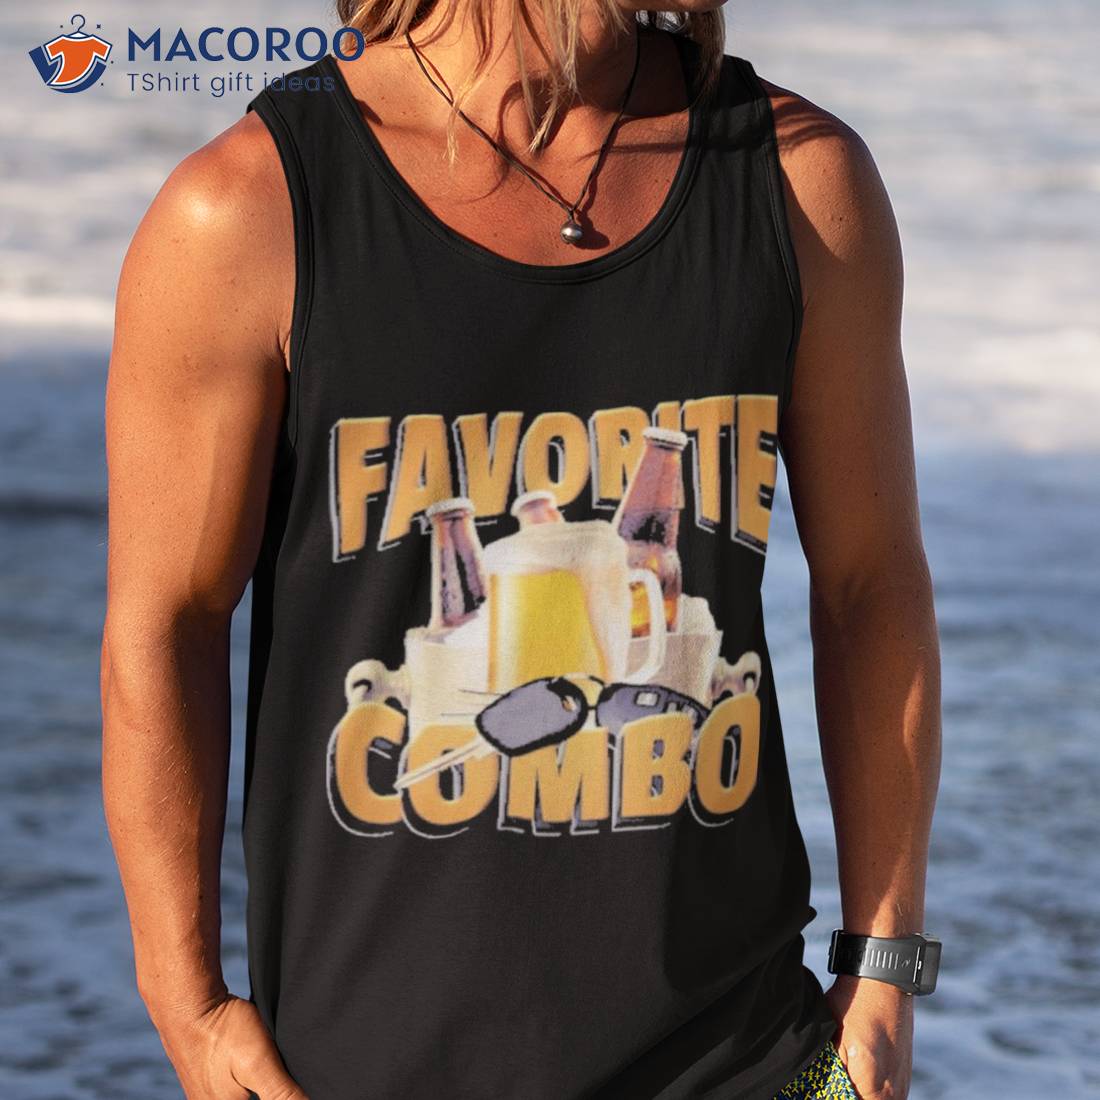 https://images.macoroo.com/wp-content/uploads/2023/04/favorite-combo-shirt-tank-top.jpg